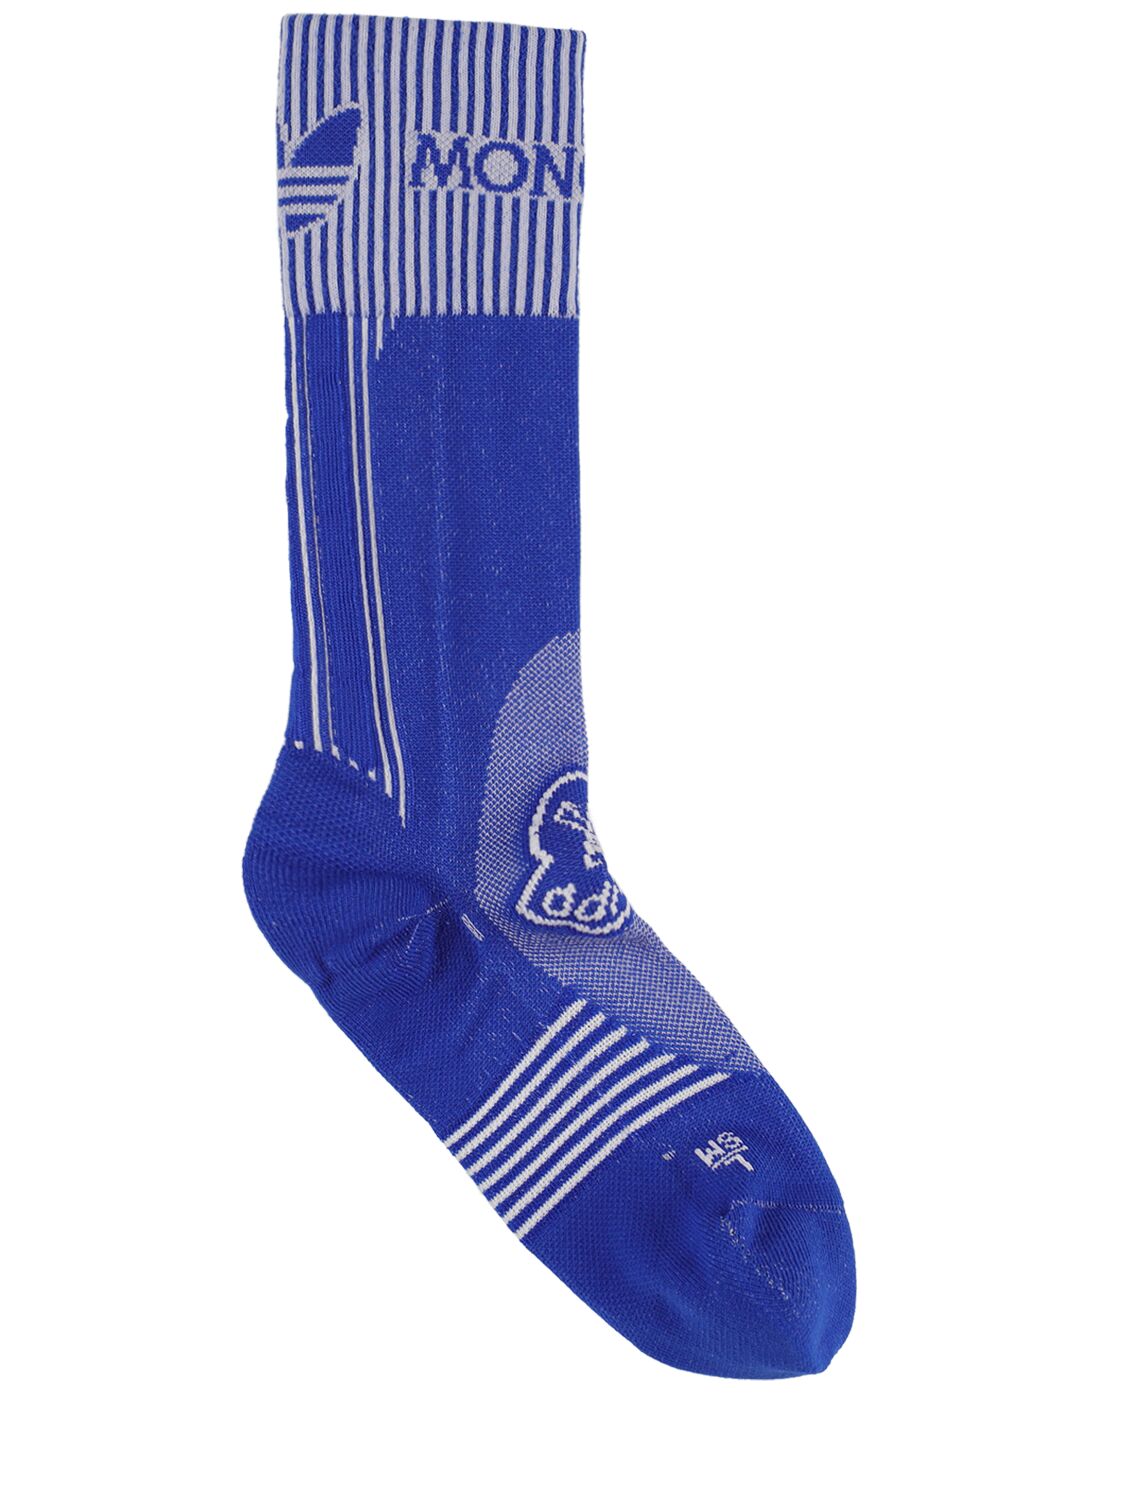 Moncler Genius Moncler X Adidas Tech Socks In Blue